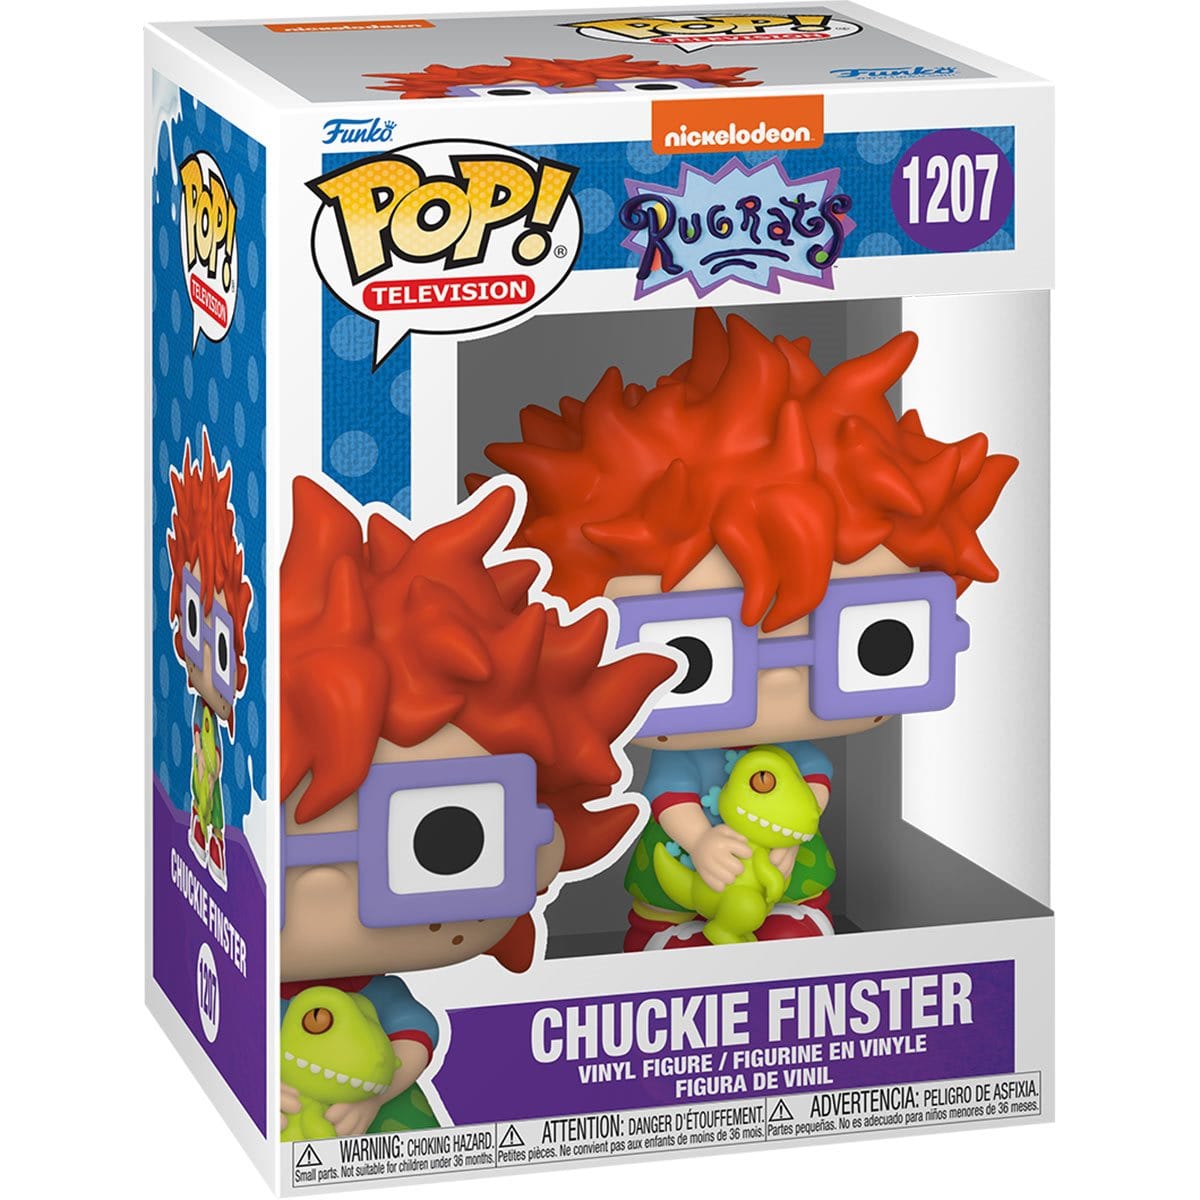 Rugrats Chuckie Finster Pop! Vinyl Figure